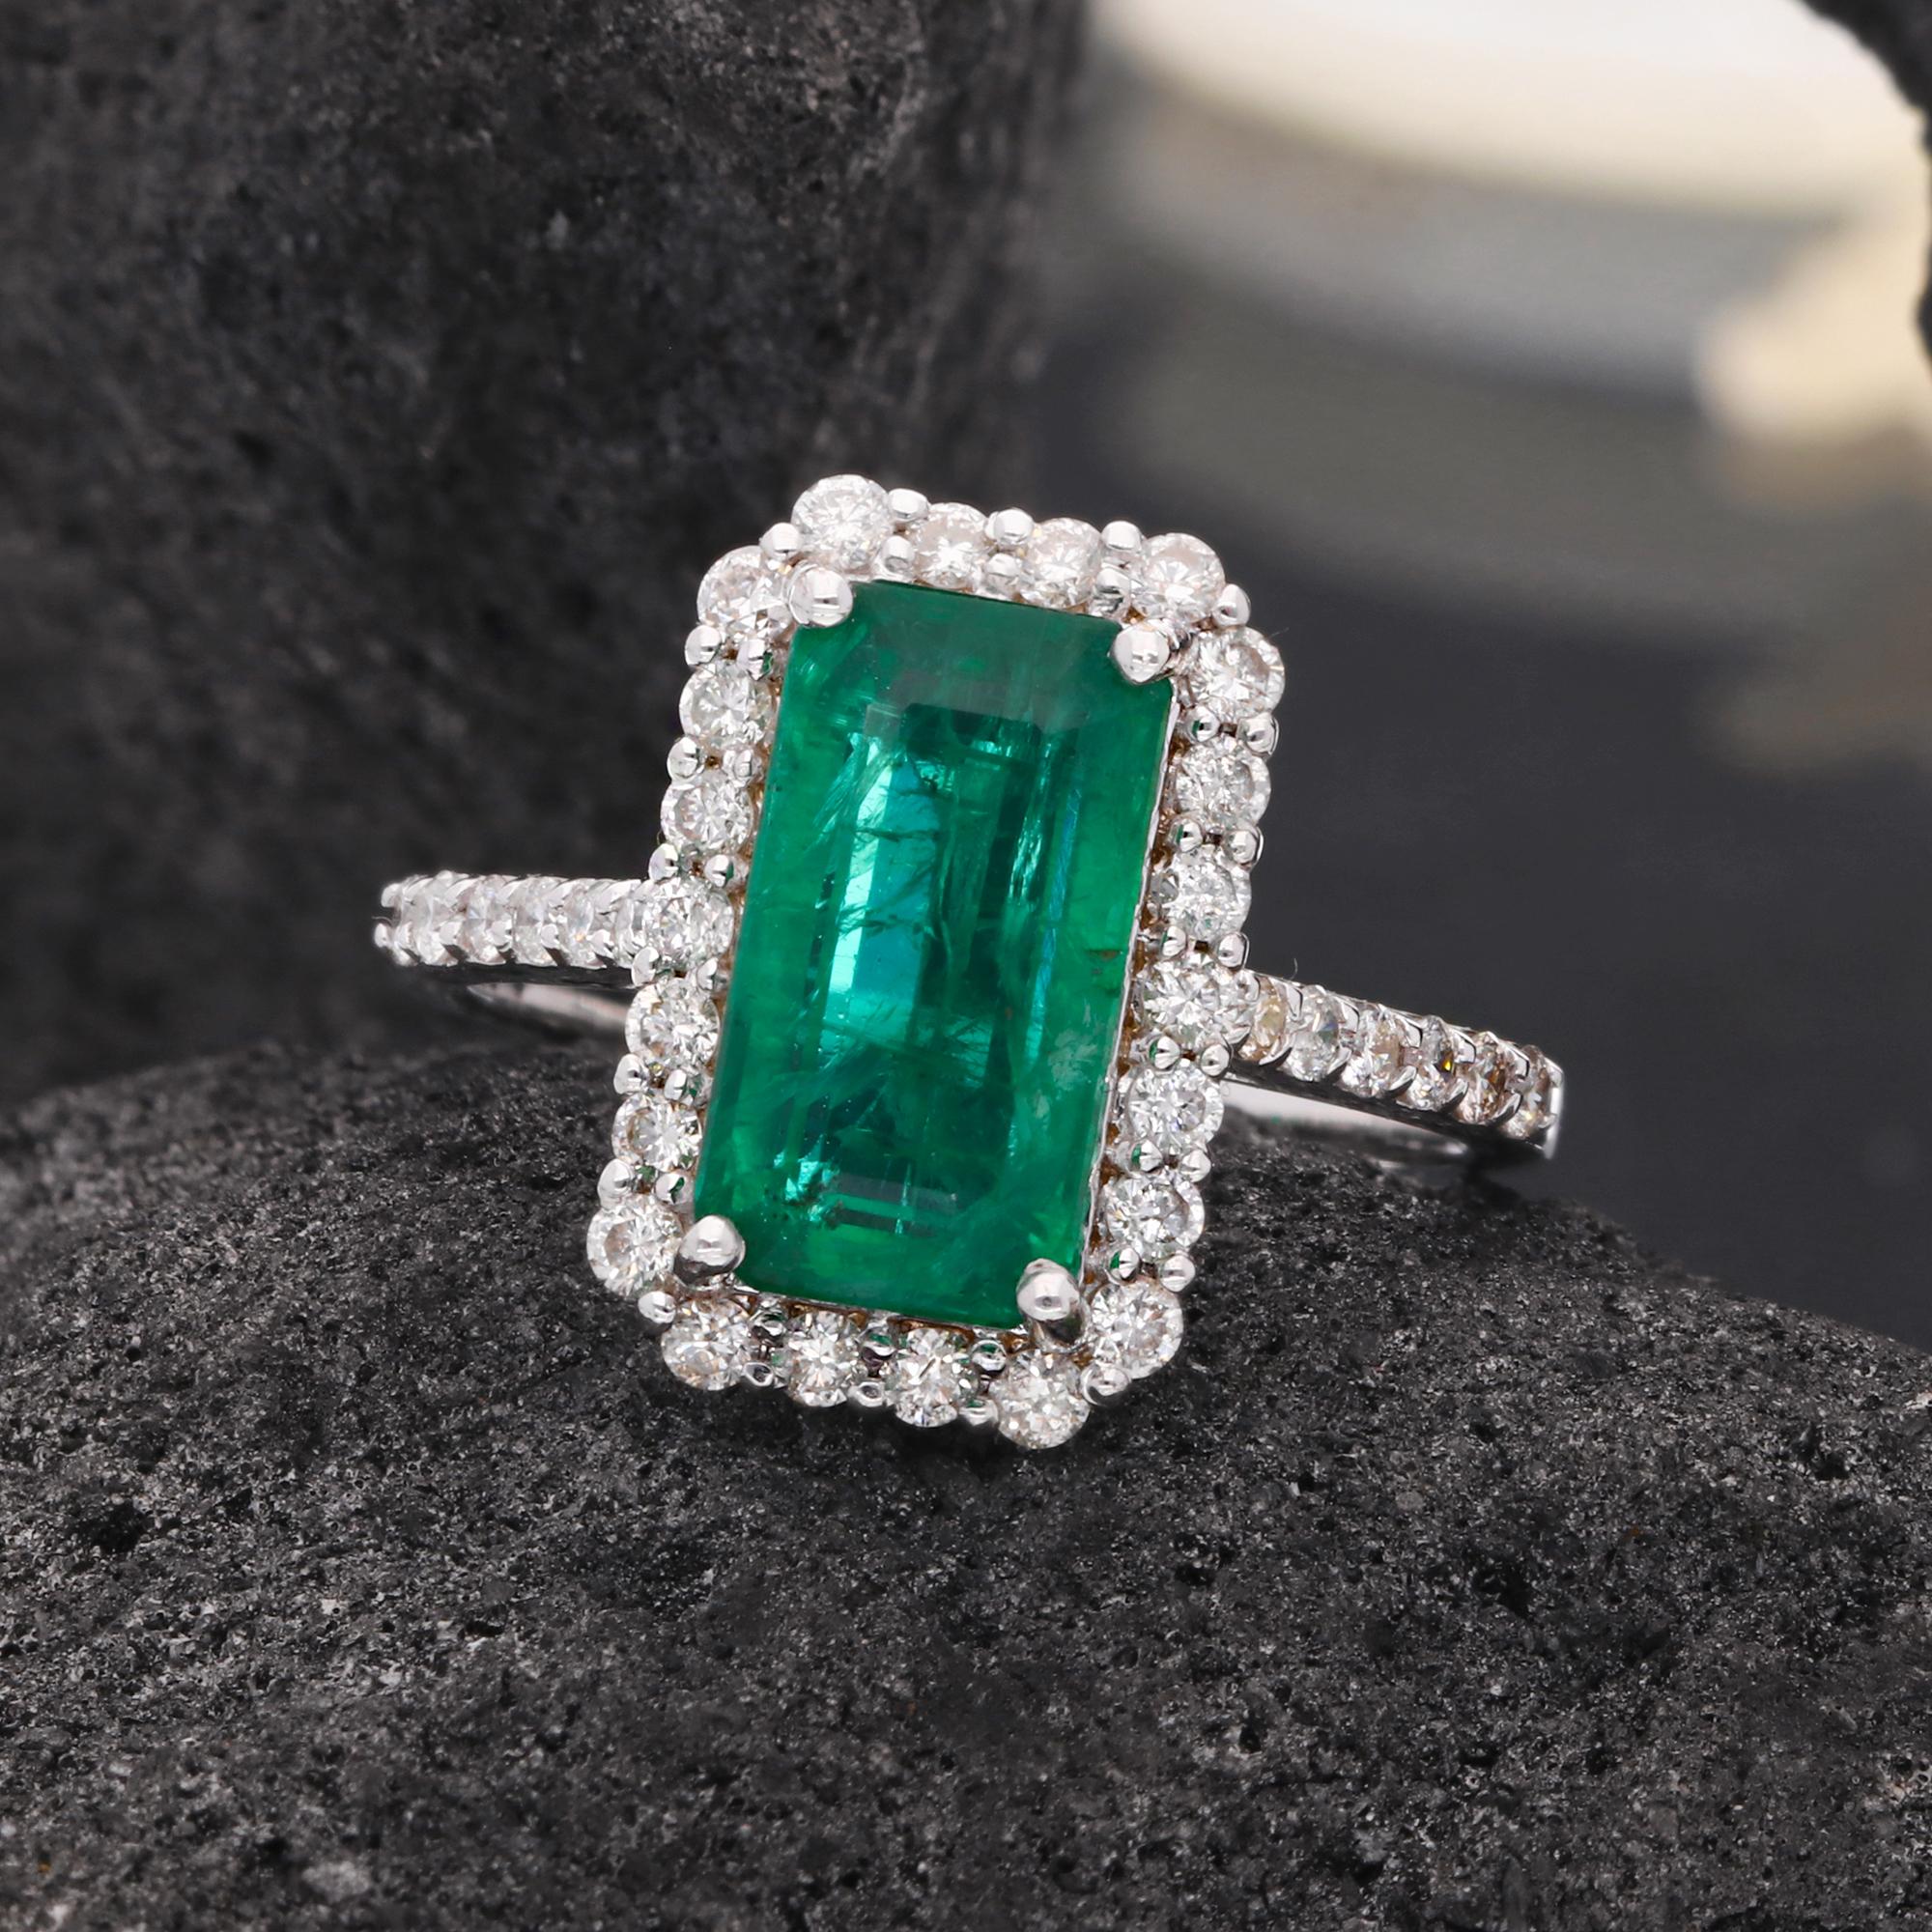 For Sale:  Natural Emerald Gemstone Ring SI Clarity HI Color Diamond 18 Karat White Gold 4